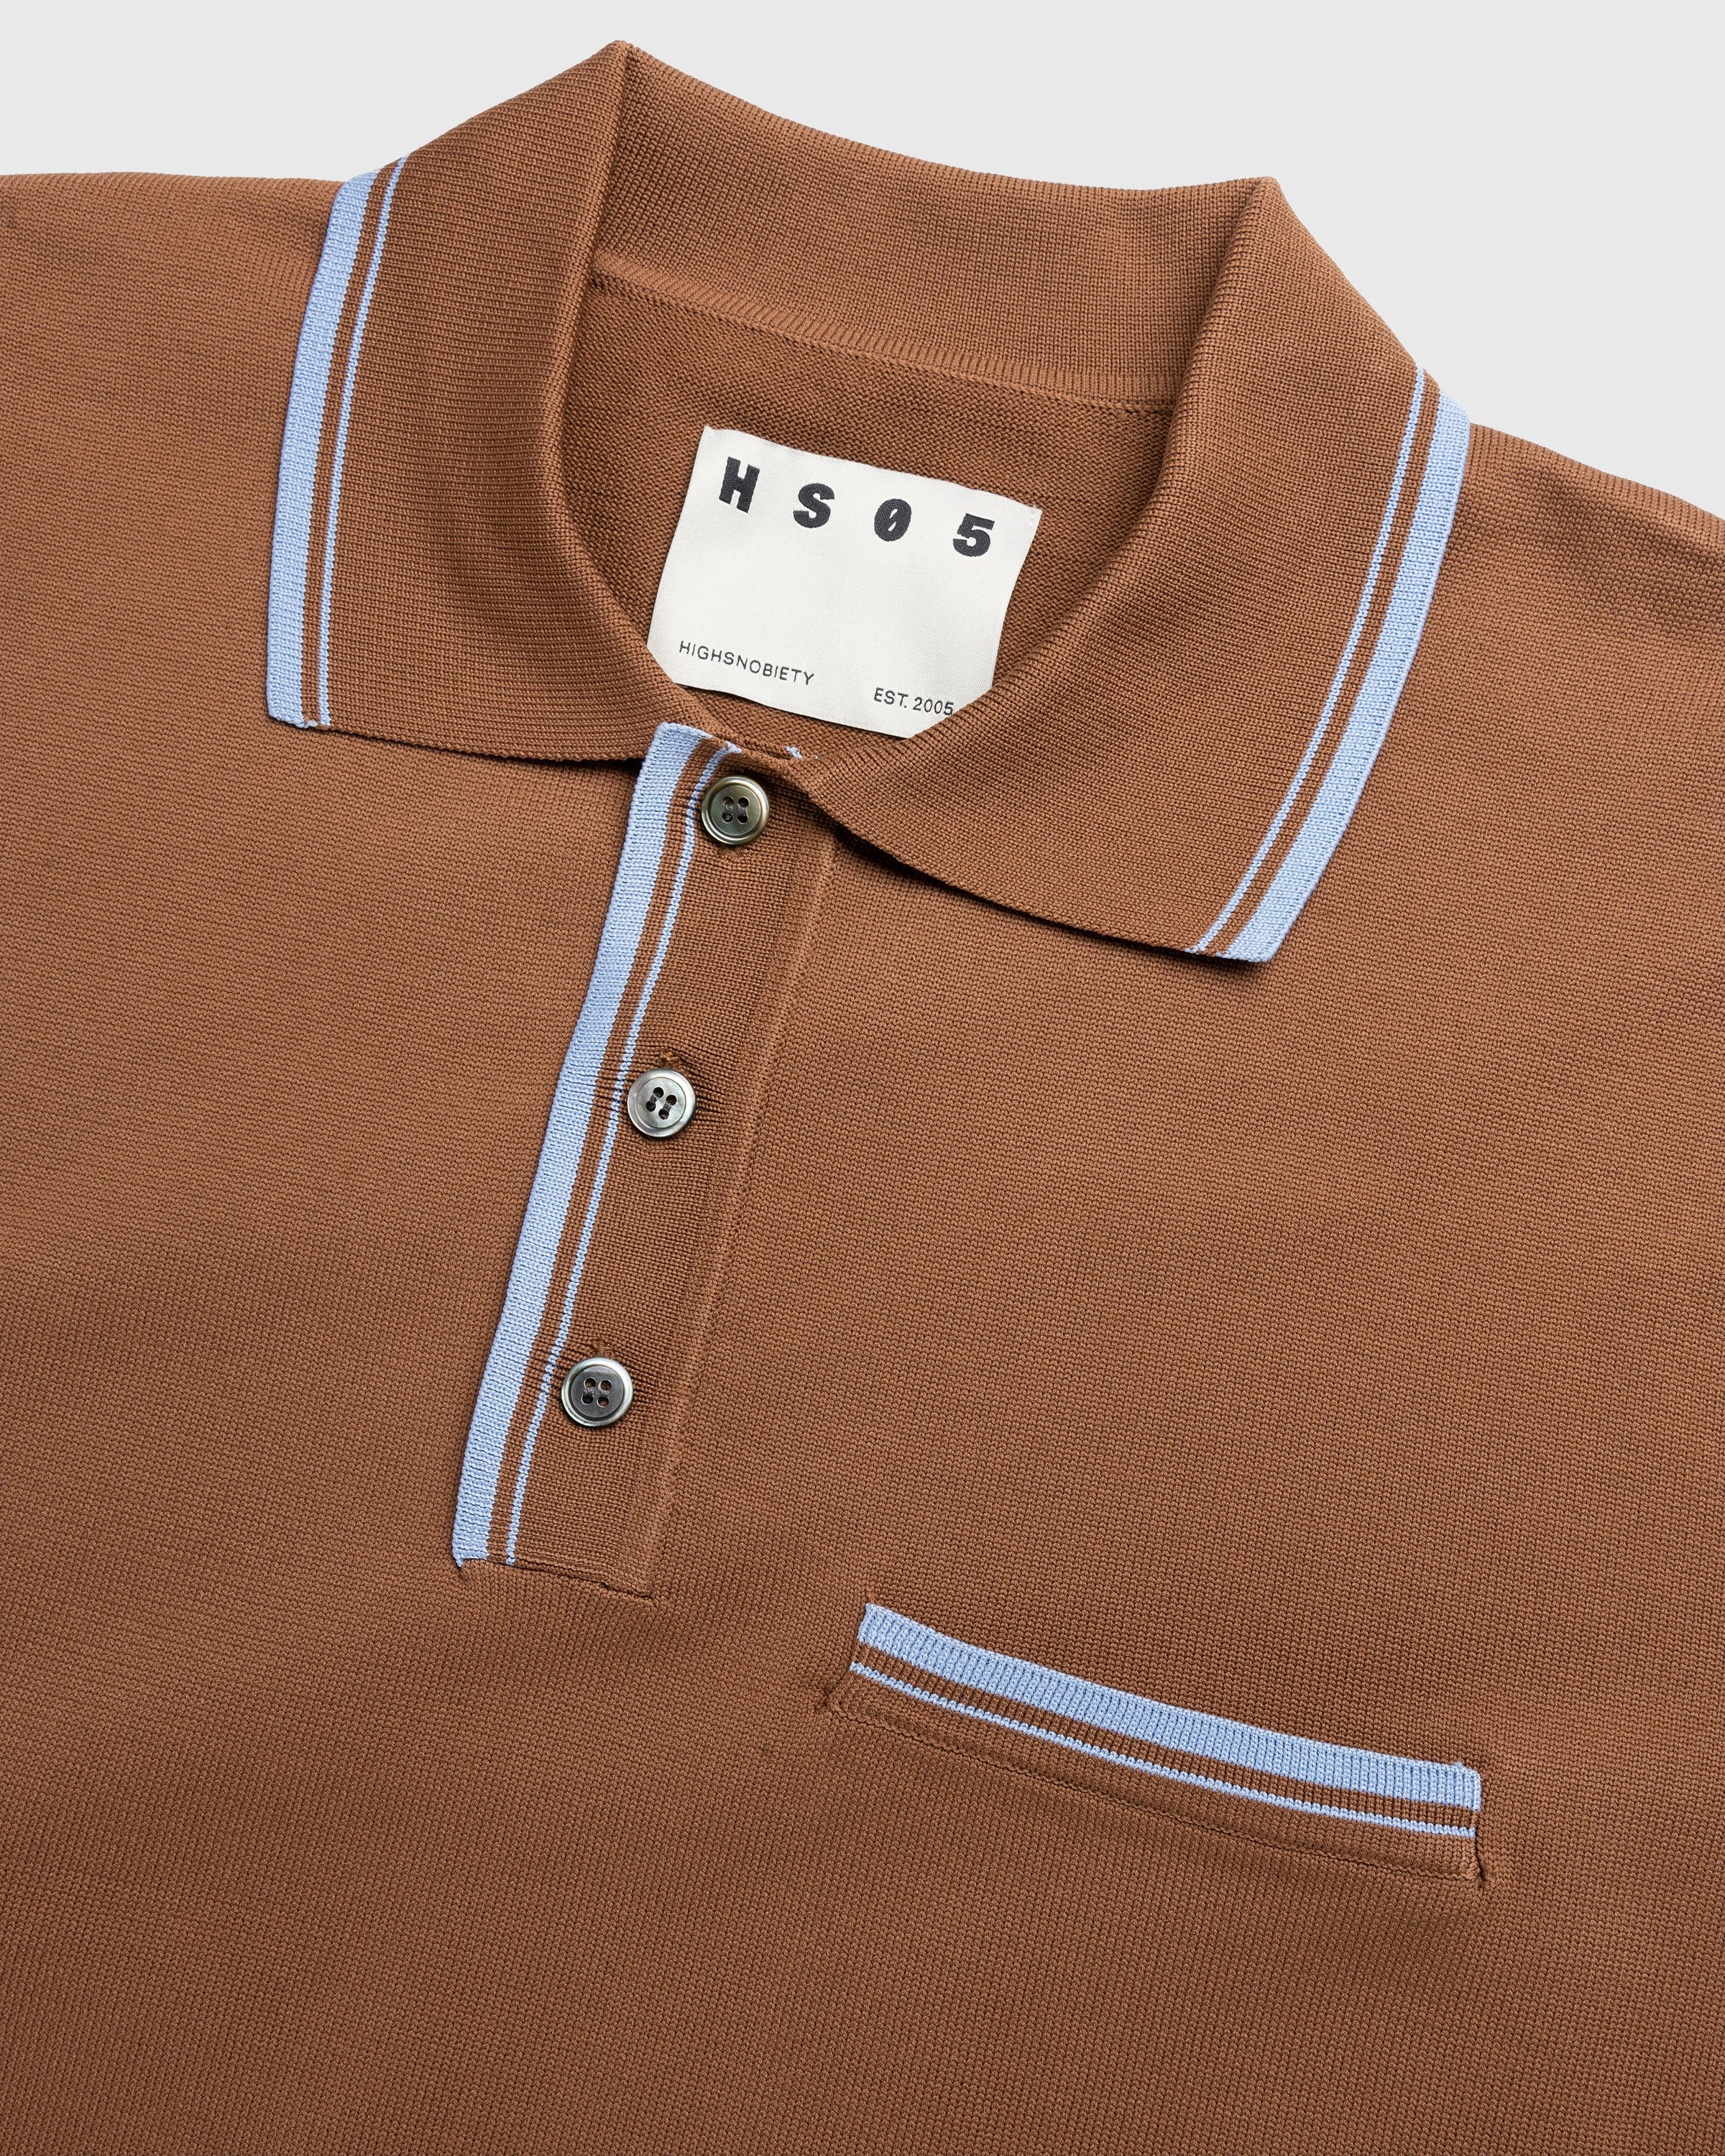 Highsnobiety HS05 – Long Sleeves Knit Polo Brown - Longsleeves - Brown - Image 6